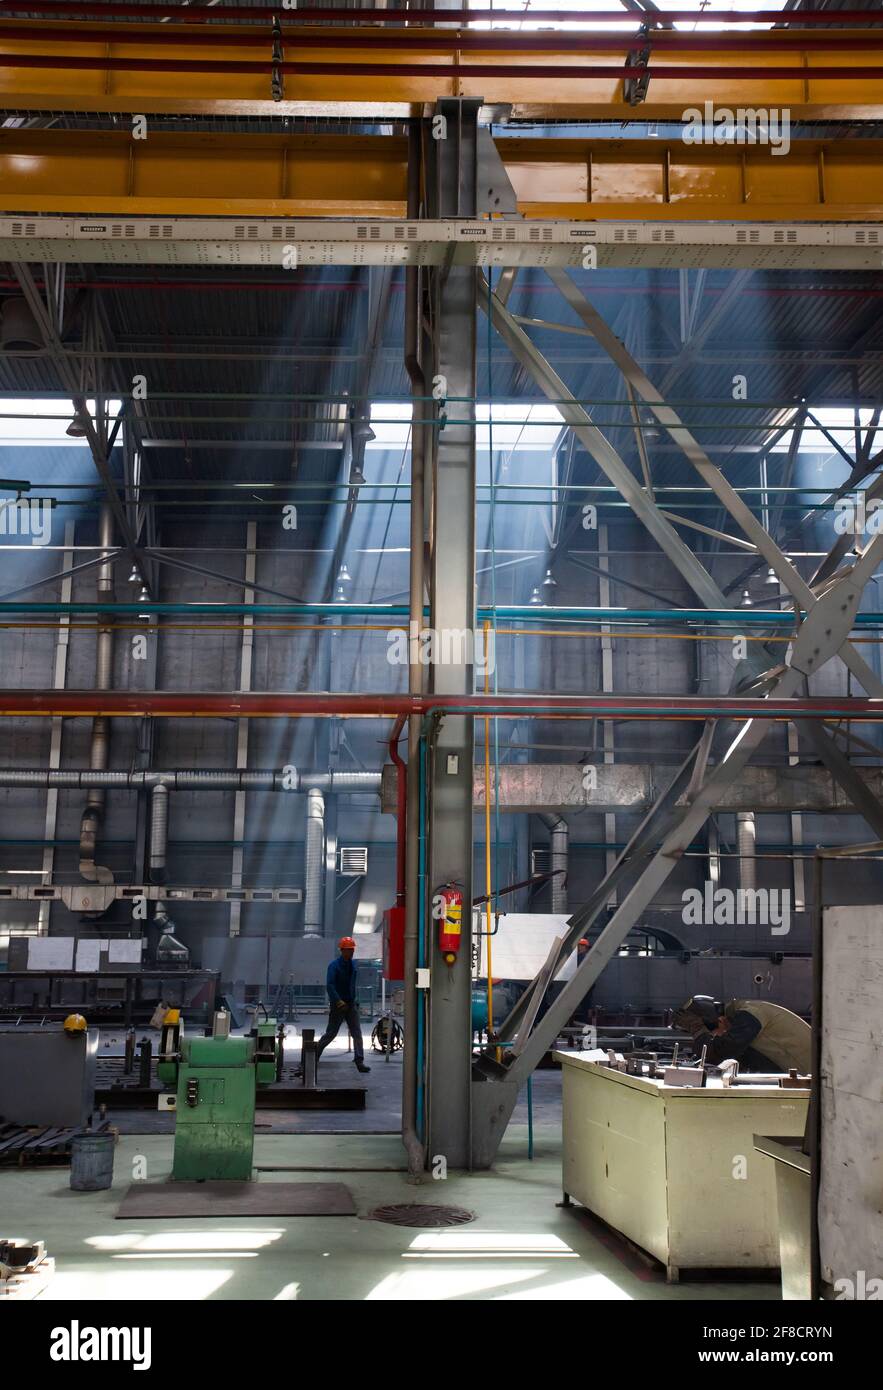 Kazakhstan, Nur-sultan. Locomotive-building plant workshop scene view. Smoke of welding and ray of light. Stock Photo